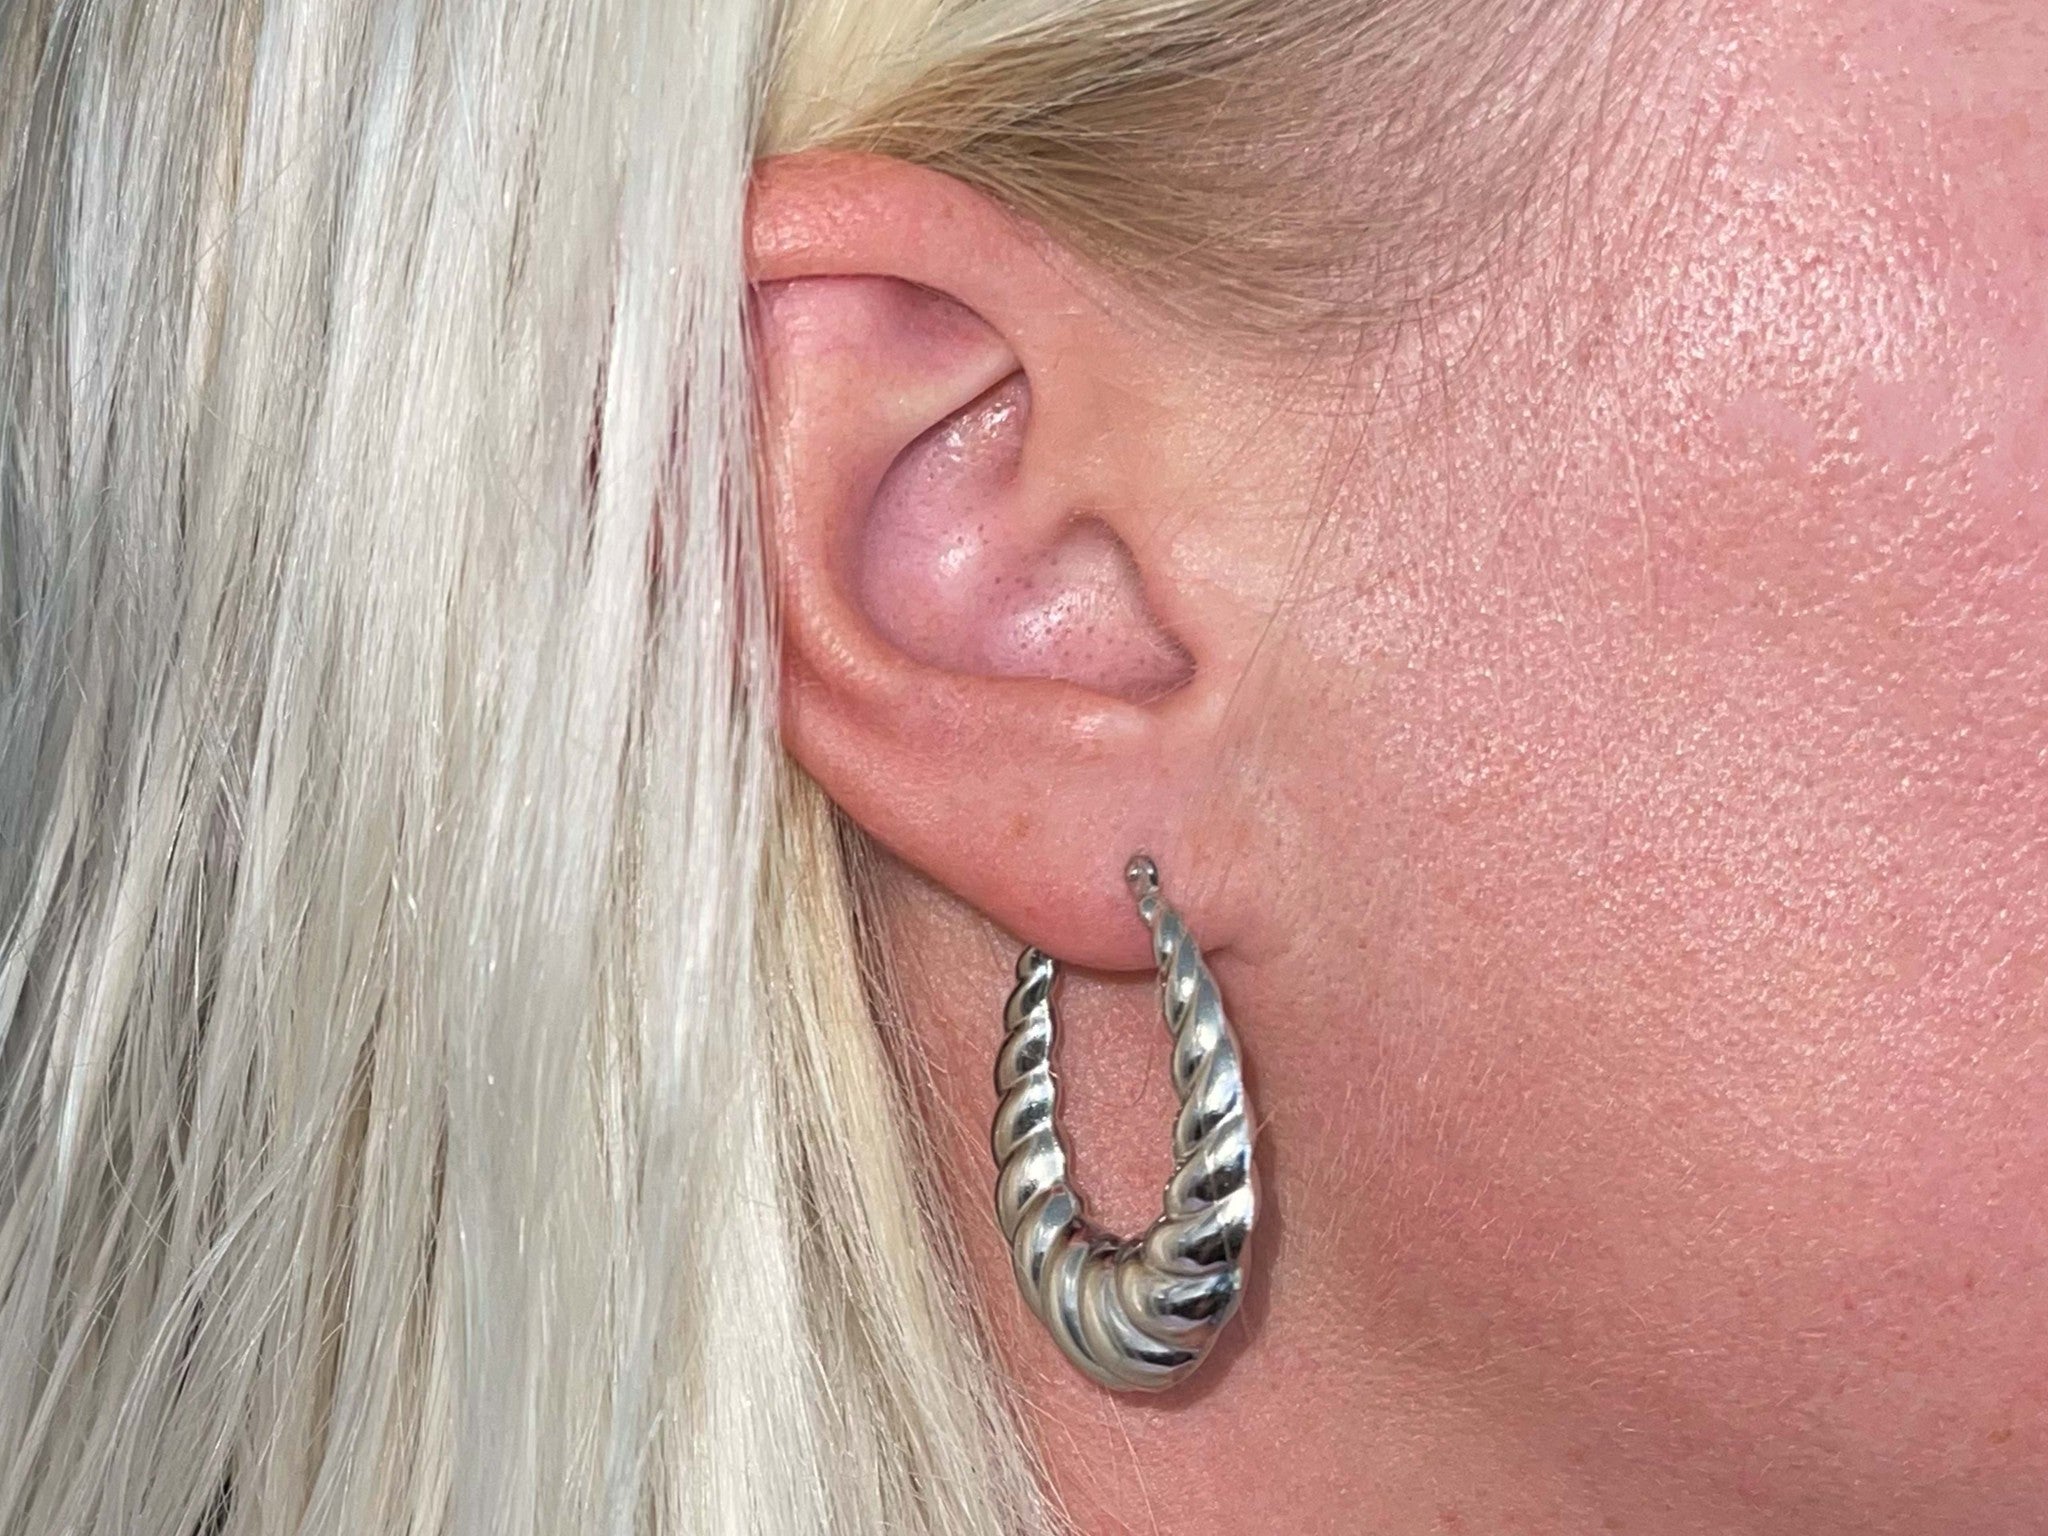 Scalloped Oval Hoop Earrings in 18k White Gold